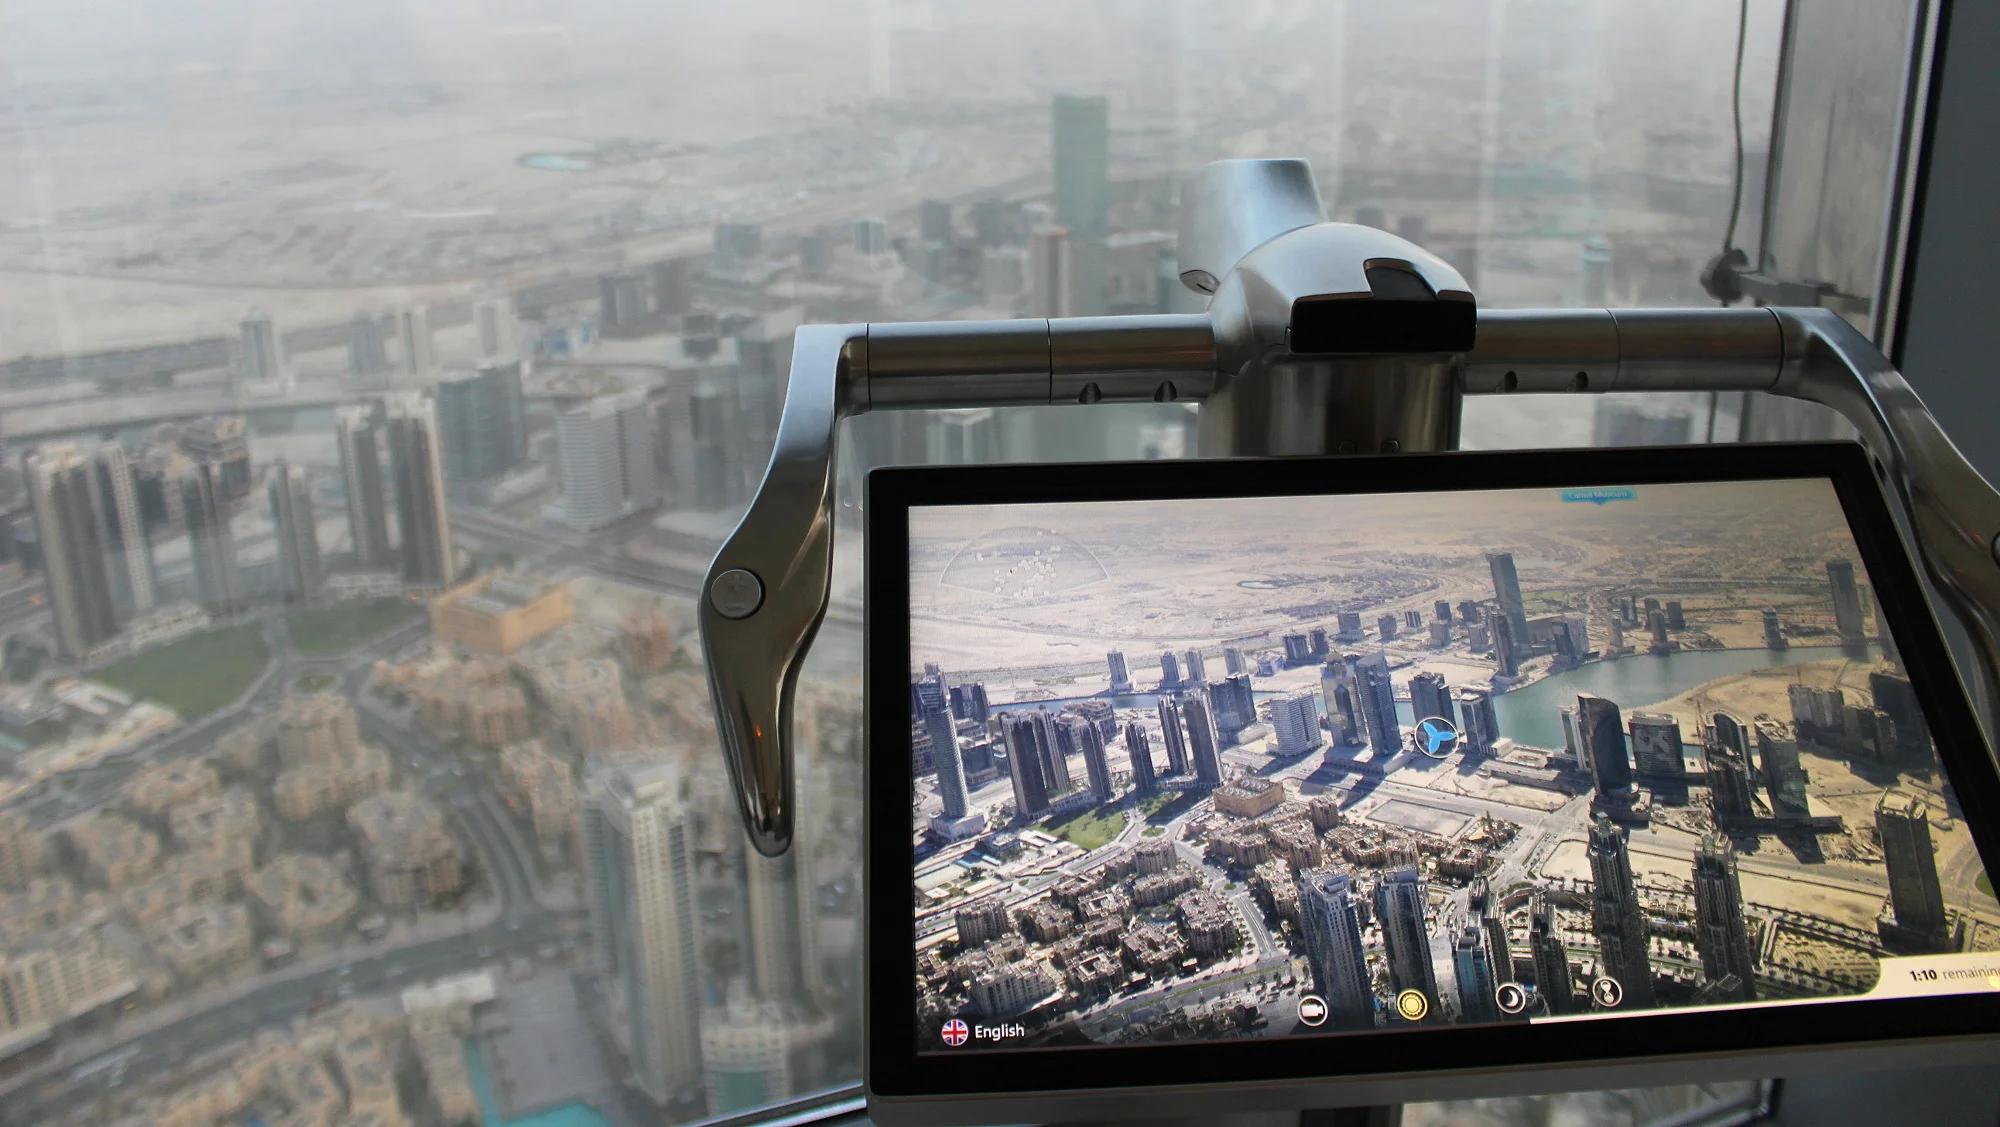 Burj Khalifa VR screen or digital binoculars showing Dubai on a clear day.